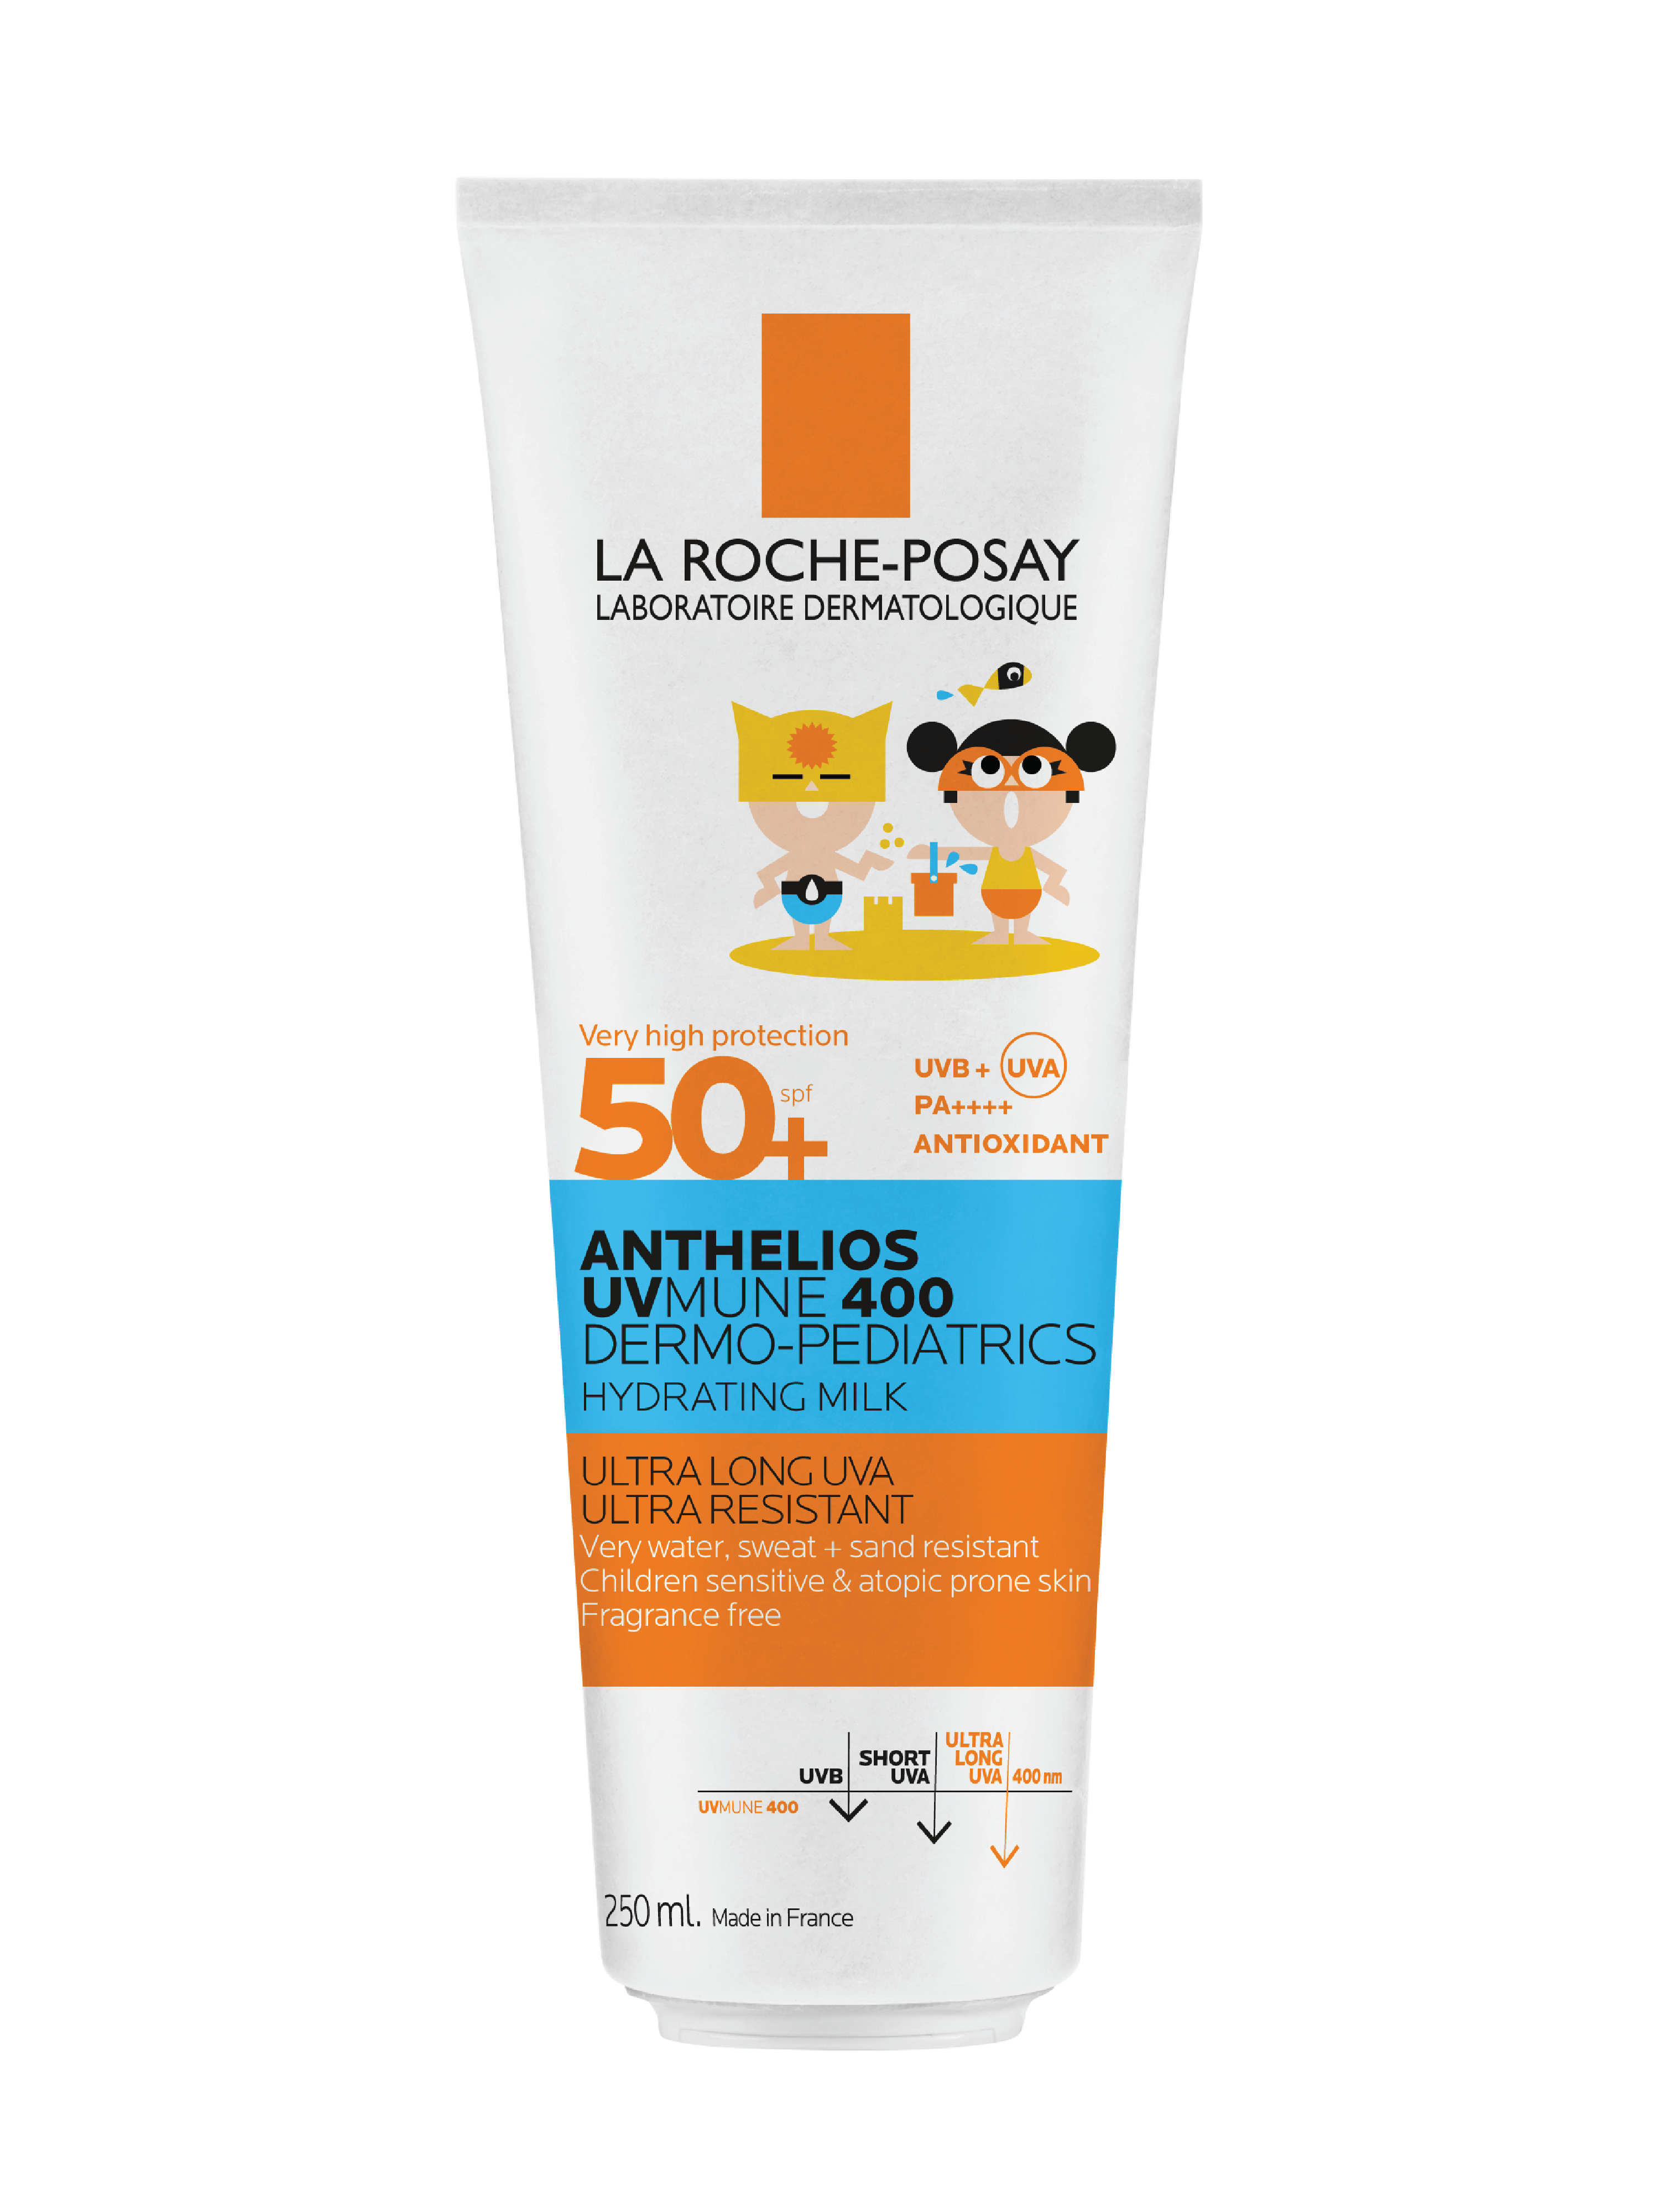 La Roche-Posay Anthelios UVMUNE 400 Kids Hydrating Milk SPF50+, 250 ml